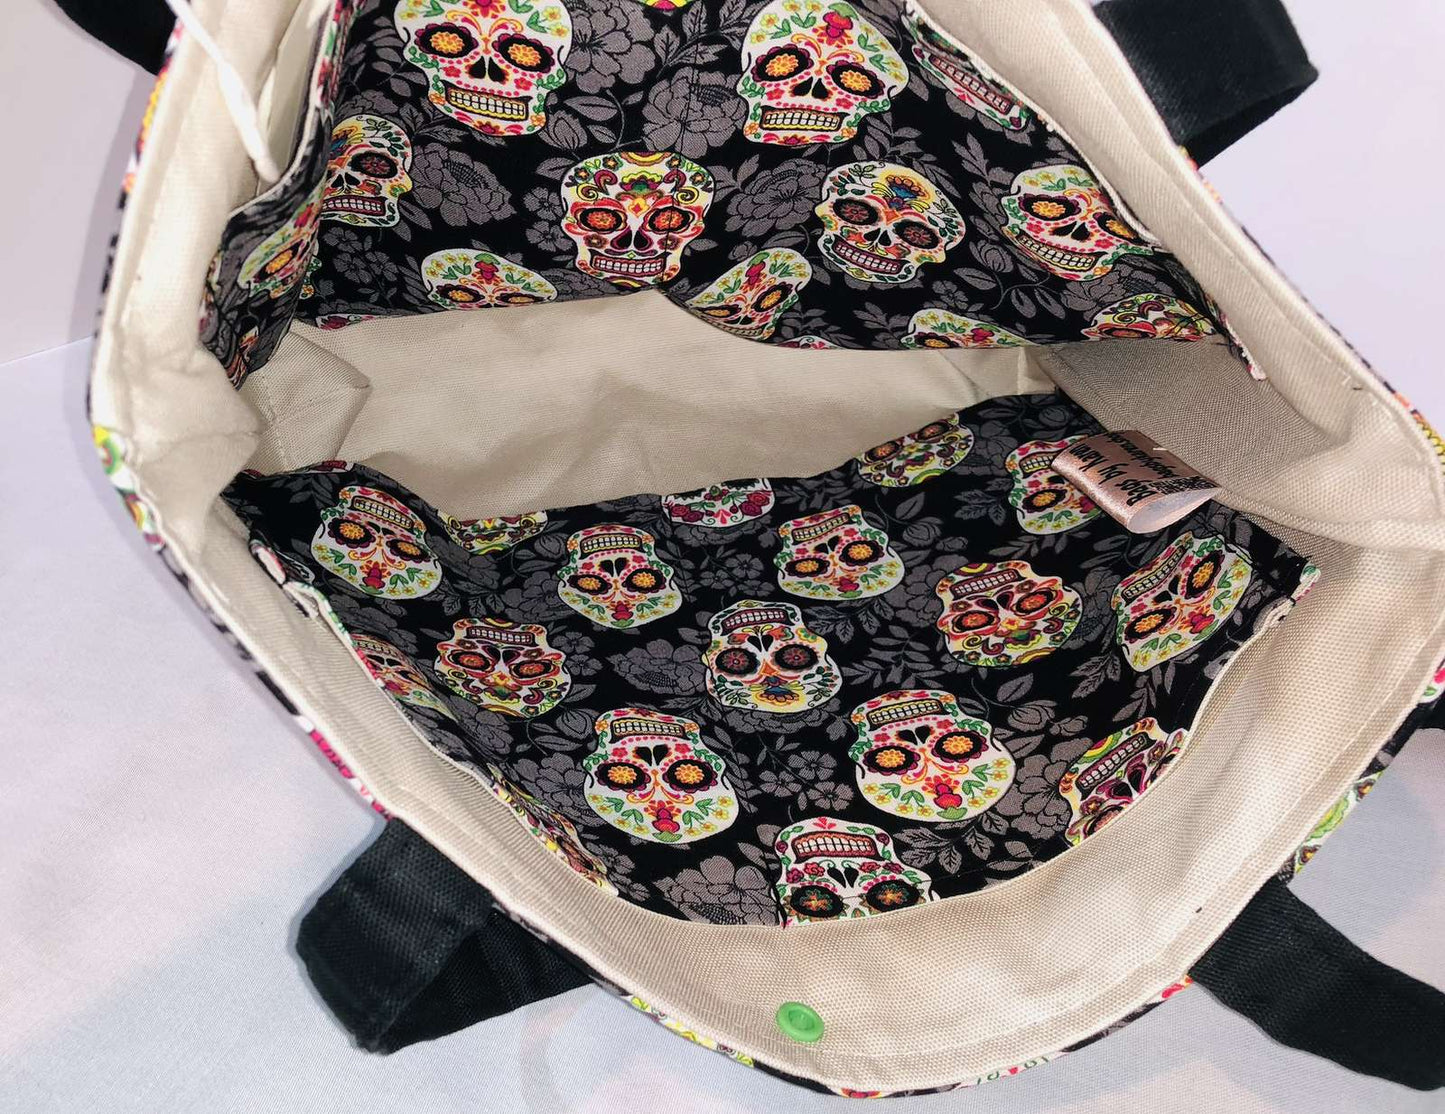 Floral Skulls Black Shoulder Bag Spooky Gothic Halloween Purse Handbag Tote + Wristlet Key FOB